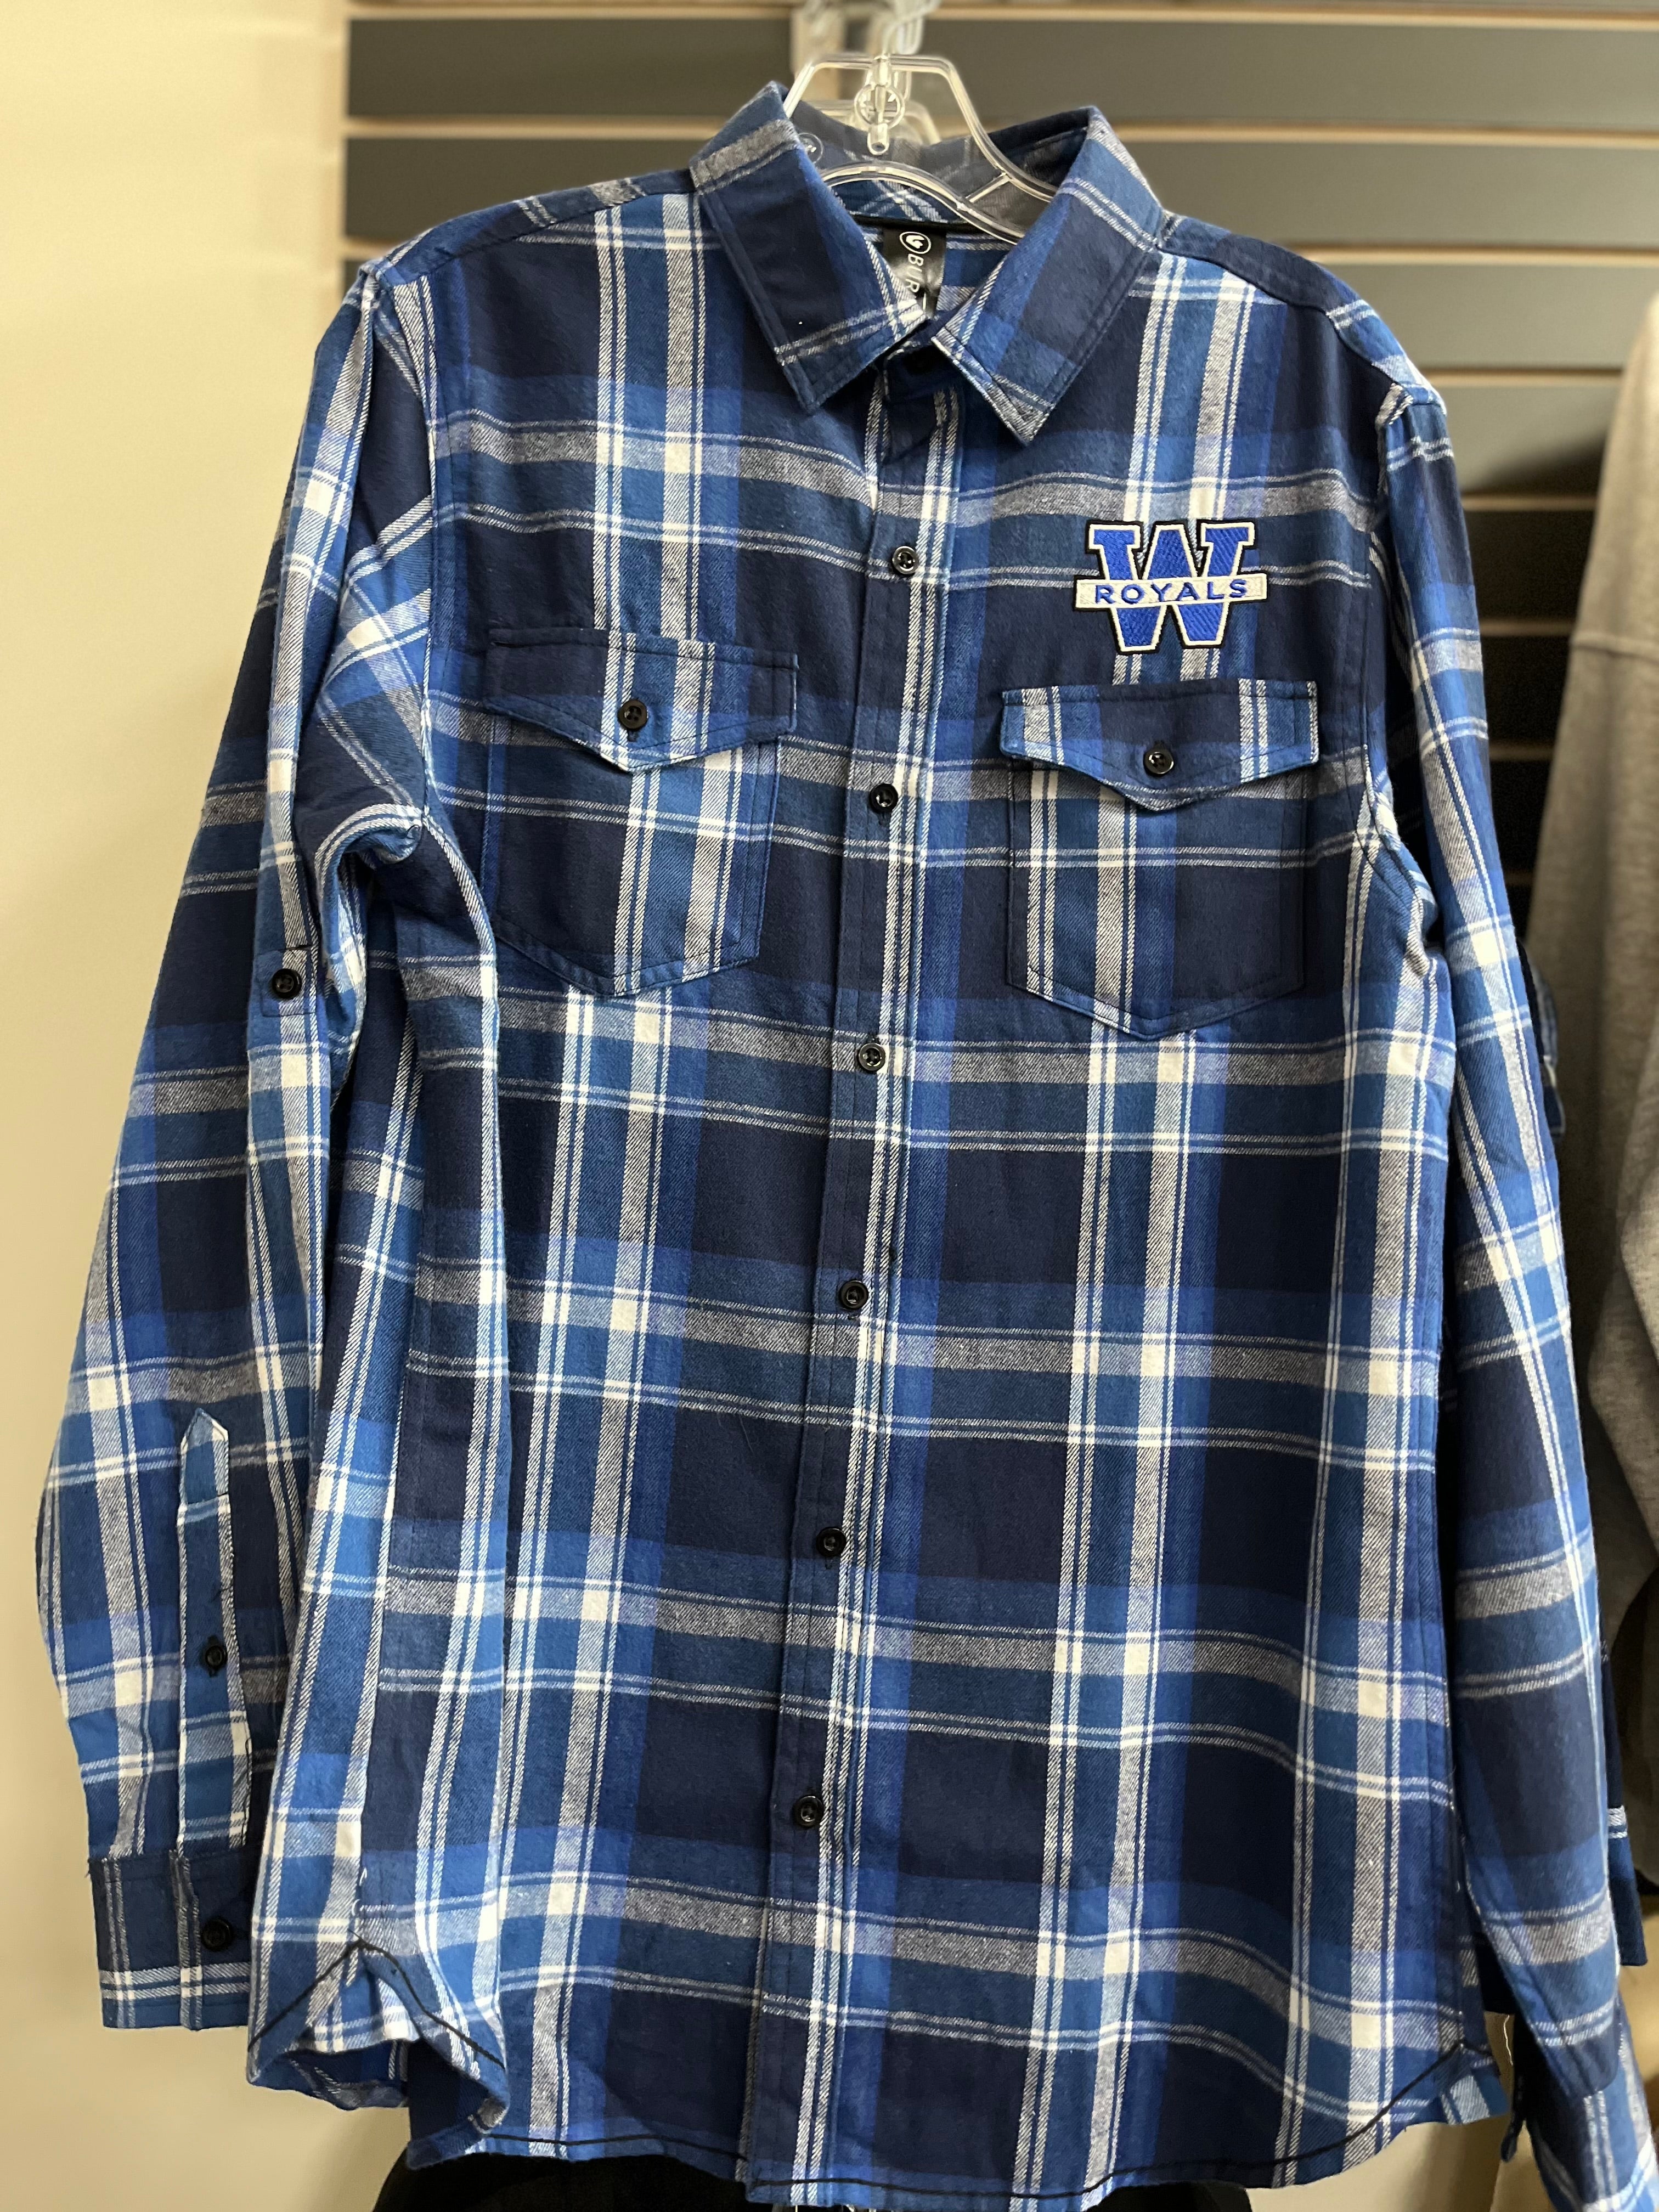 Royals Flannel Shirt-BUTTON UP-Advanced Sportswear